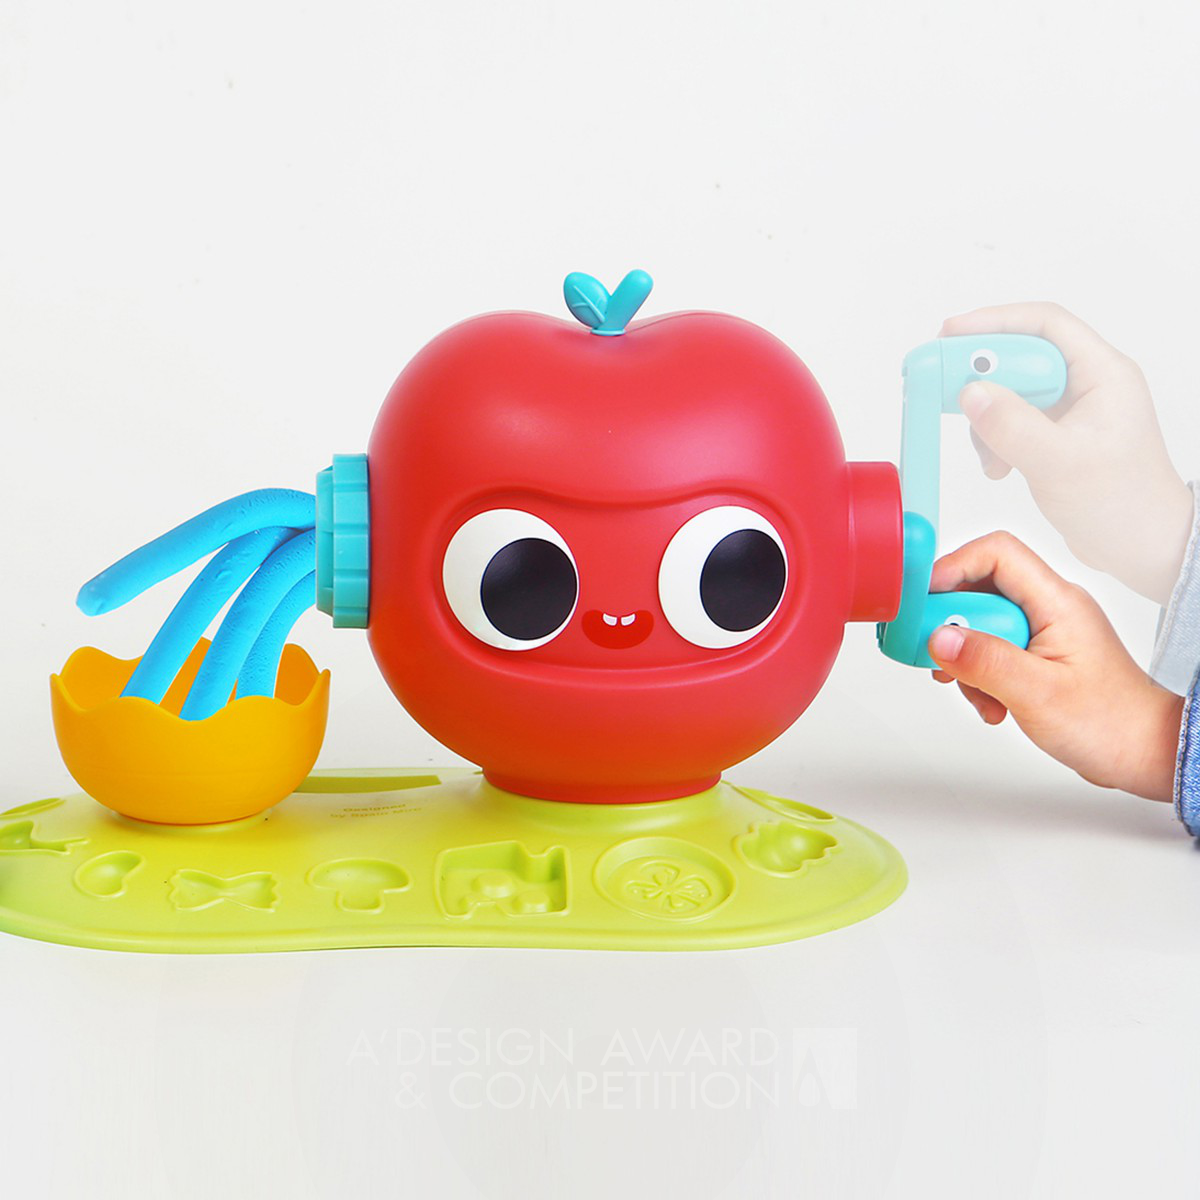 Vegetable - Ein innovatives Spielzeug-Toolset für Kinder